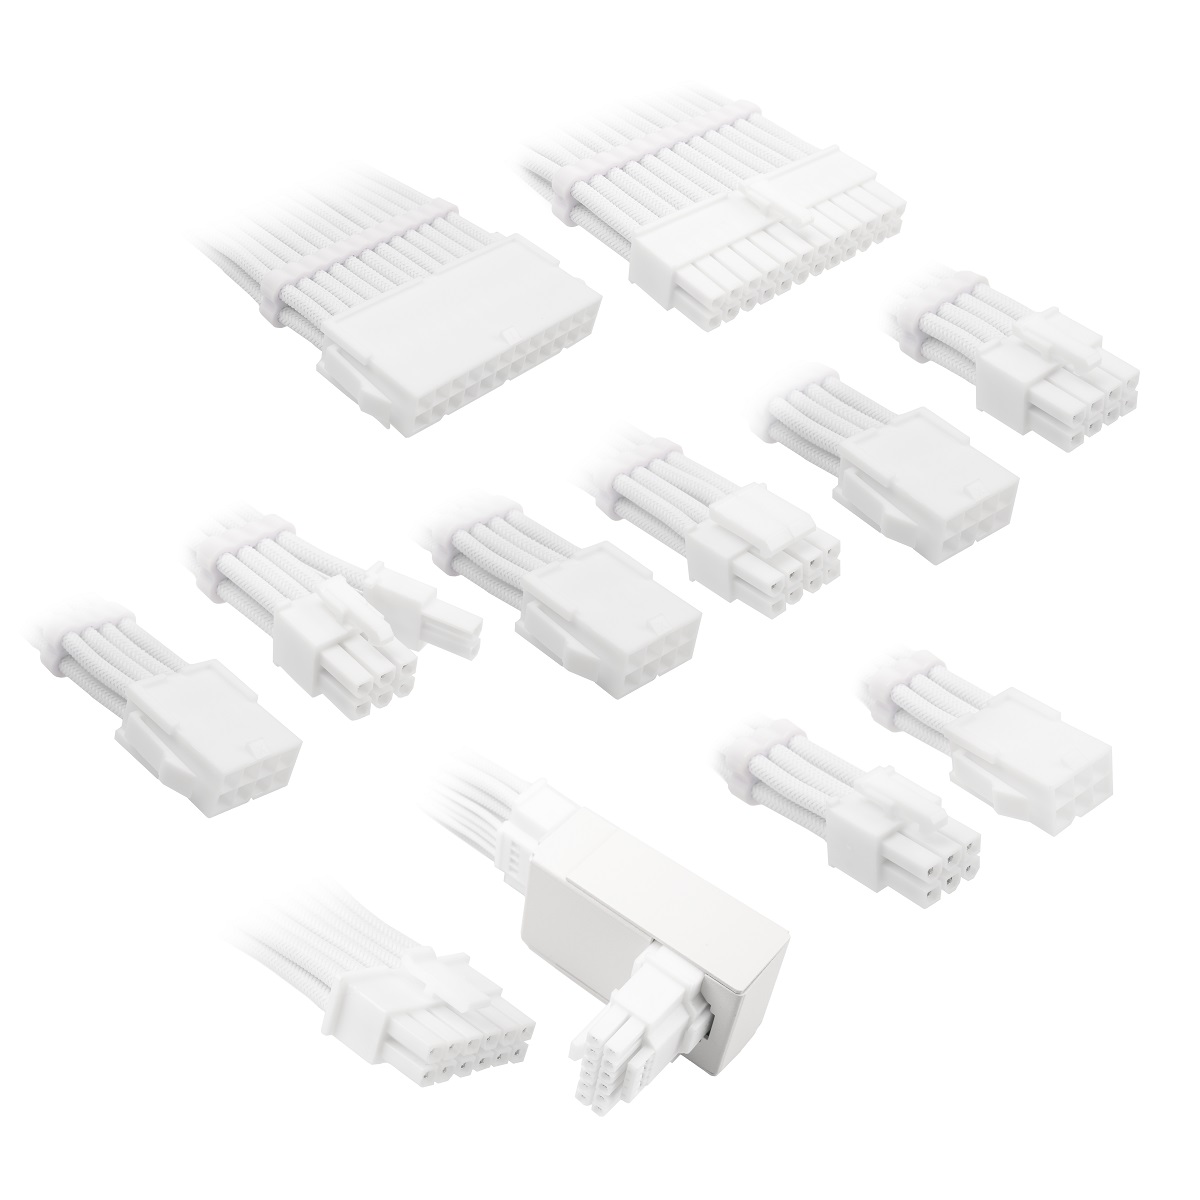 Kolink - Kolink Core Pro Braided Cable Extension Kit 12VHWPR Type 1 - Brilliant White